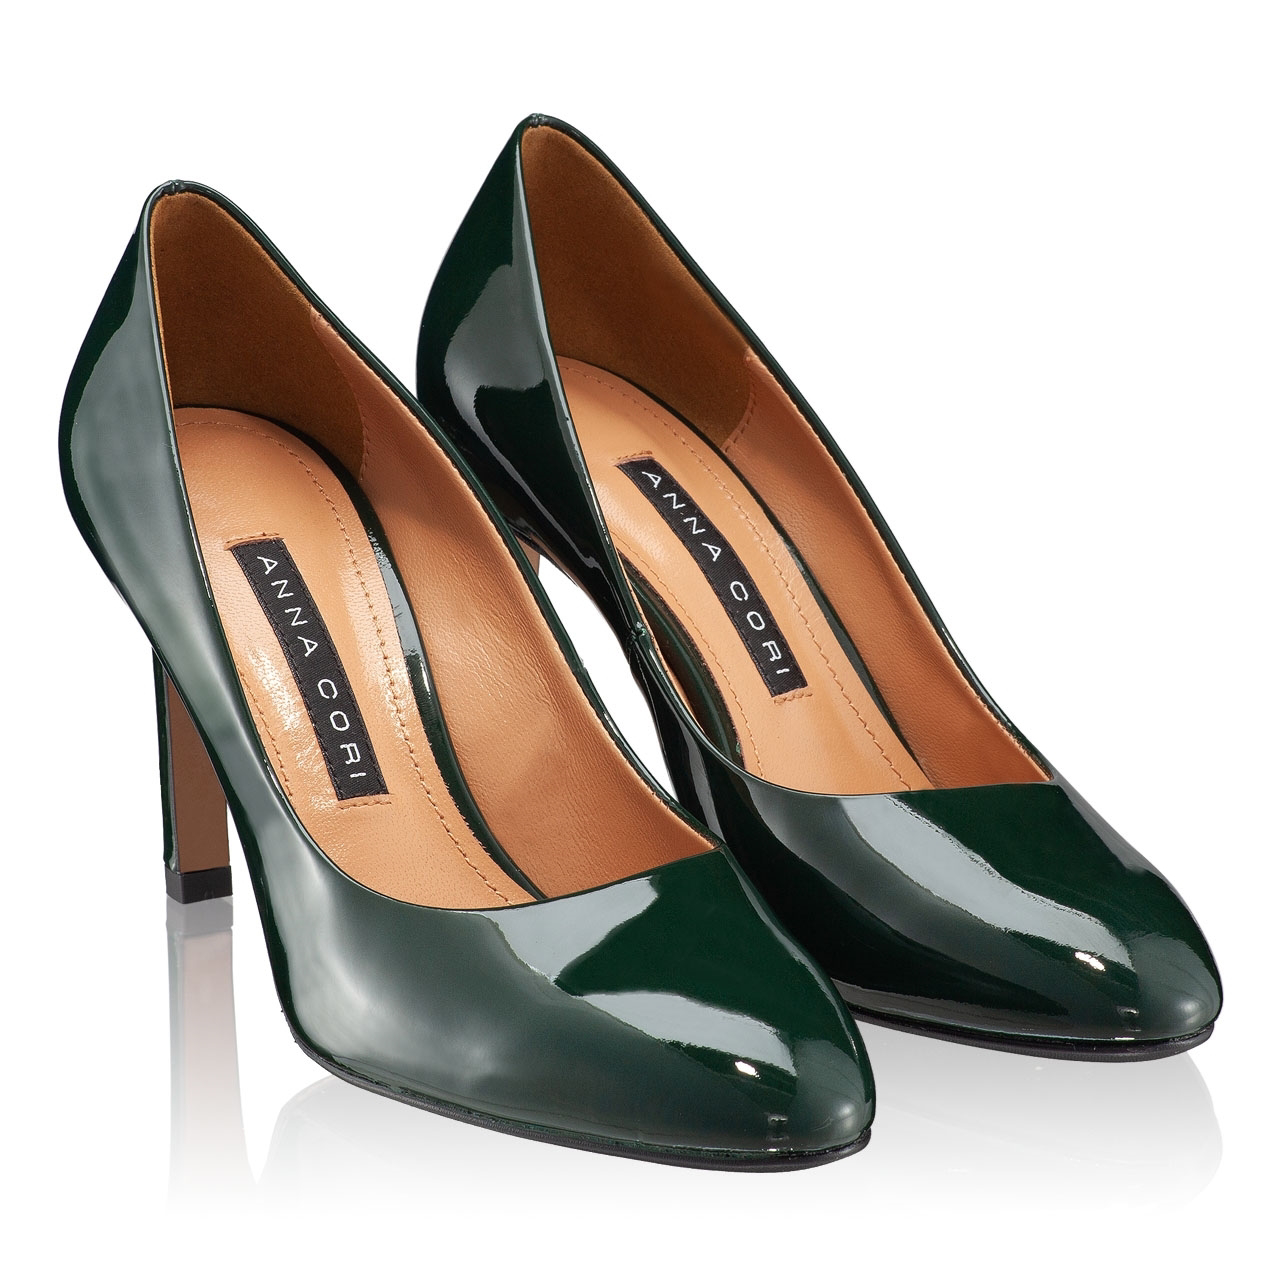 Imagine Pantofi Eleganti Dama 5613 Vernice Verde